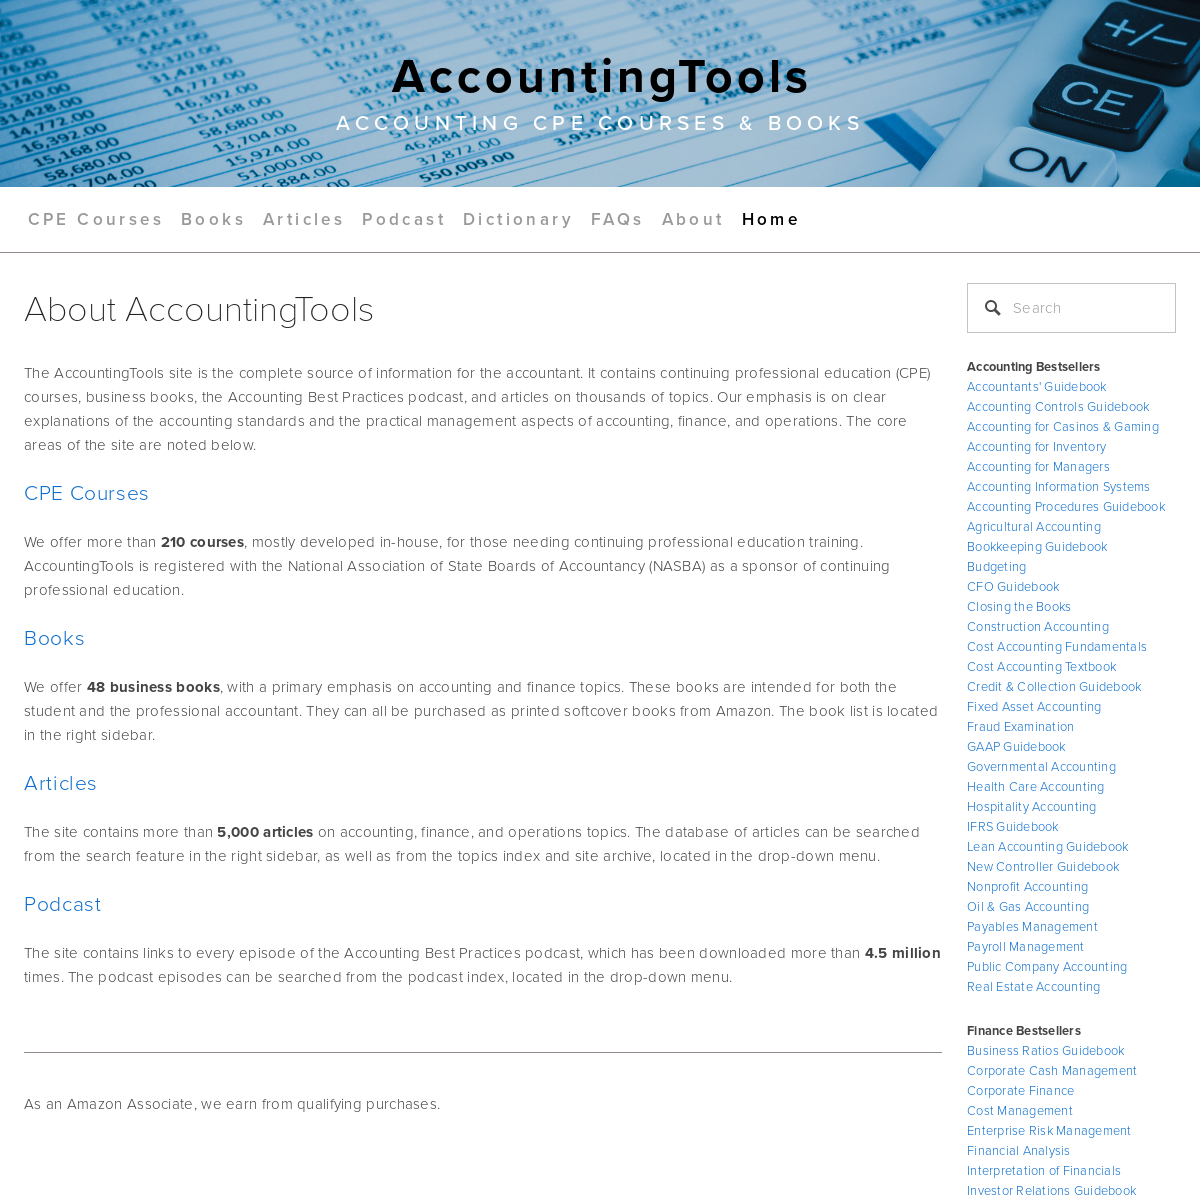 A complete backup of accountingtools.com